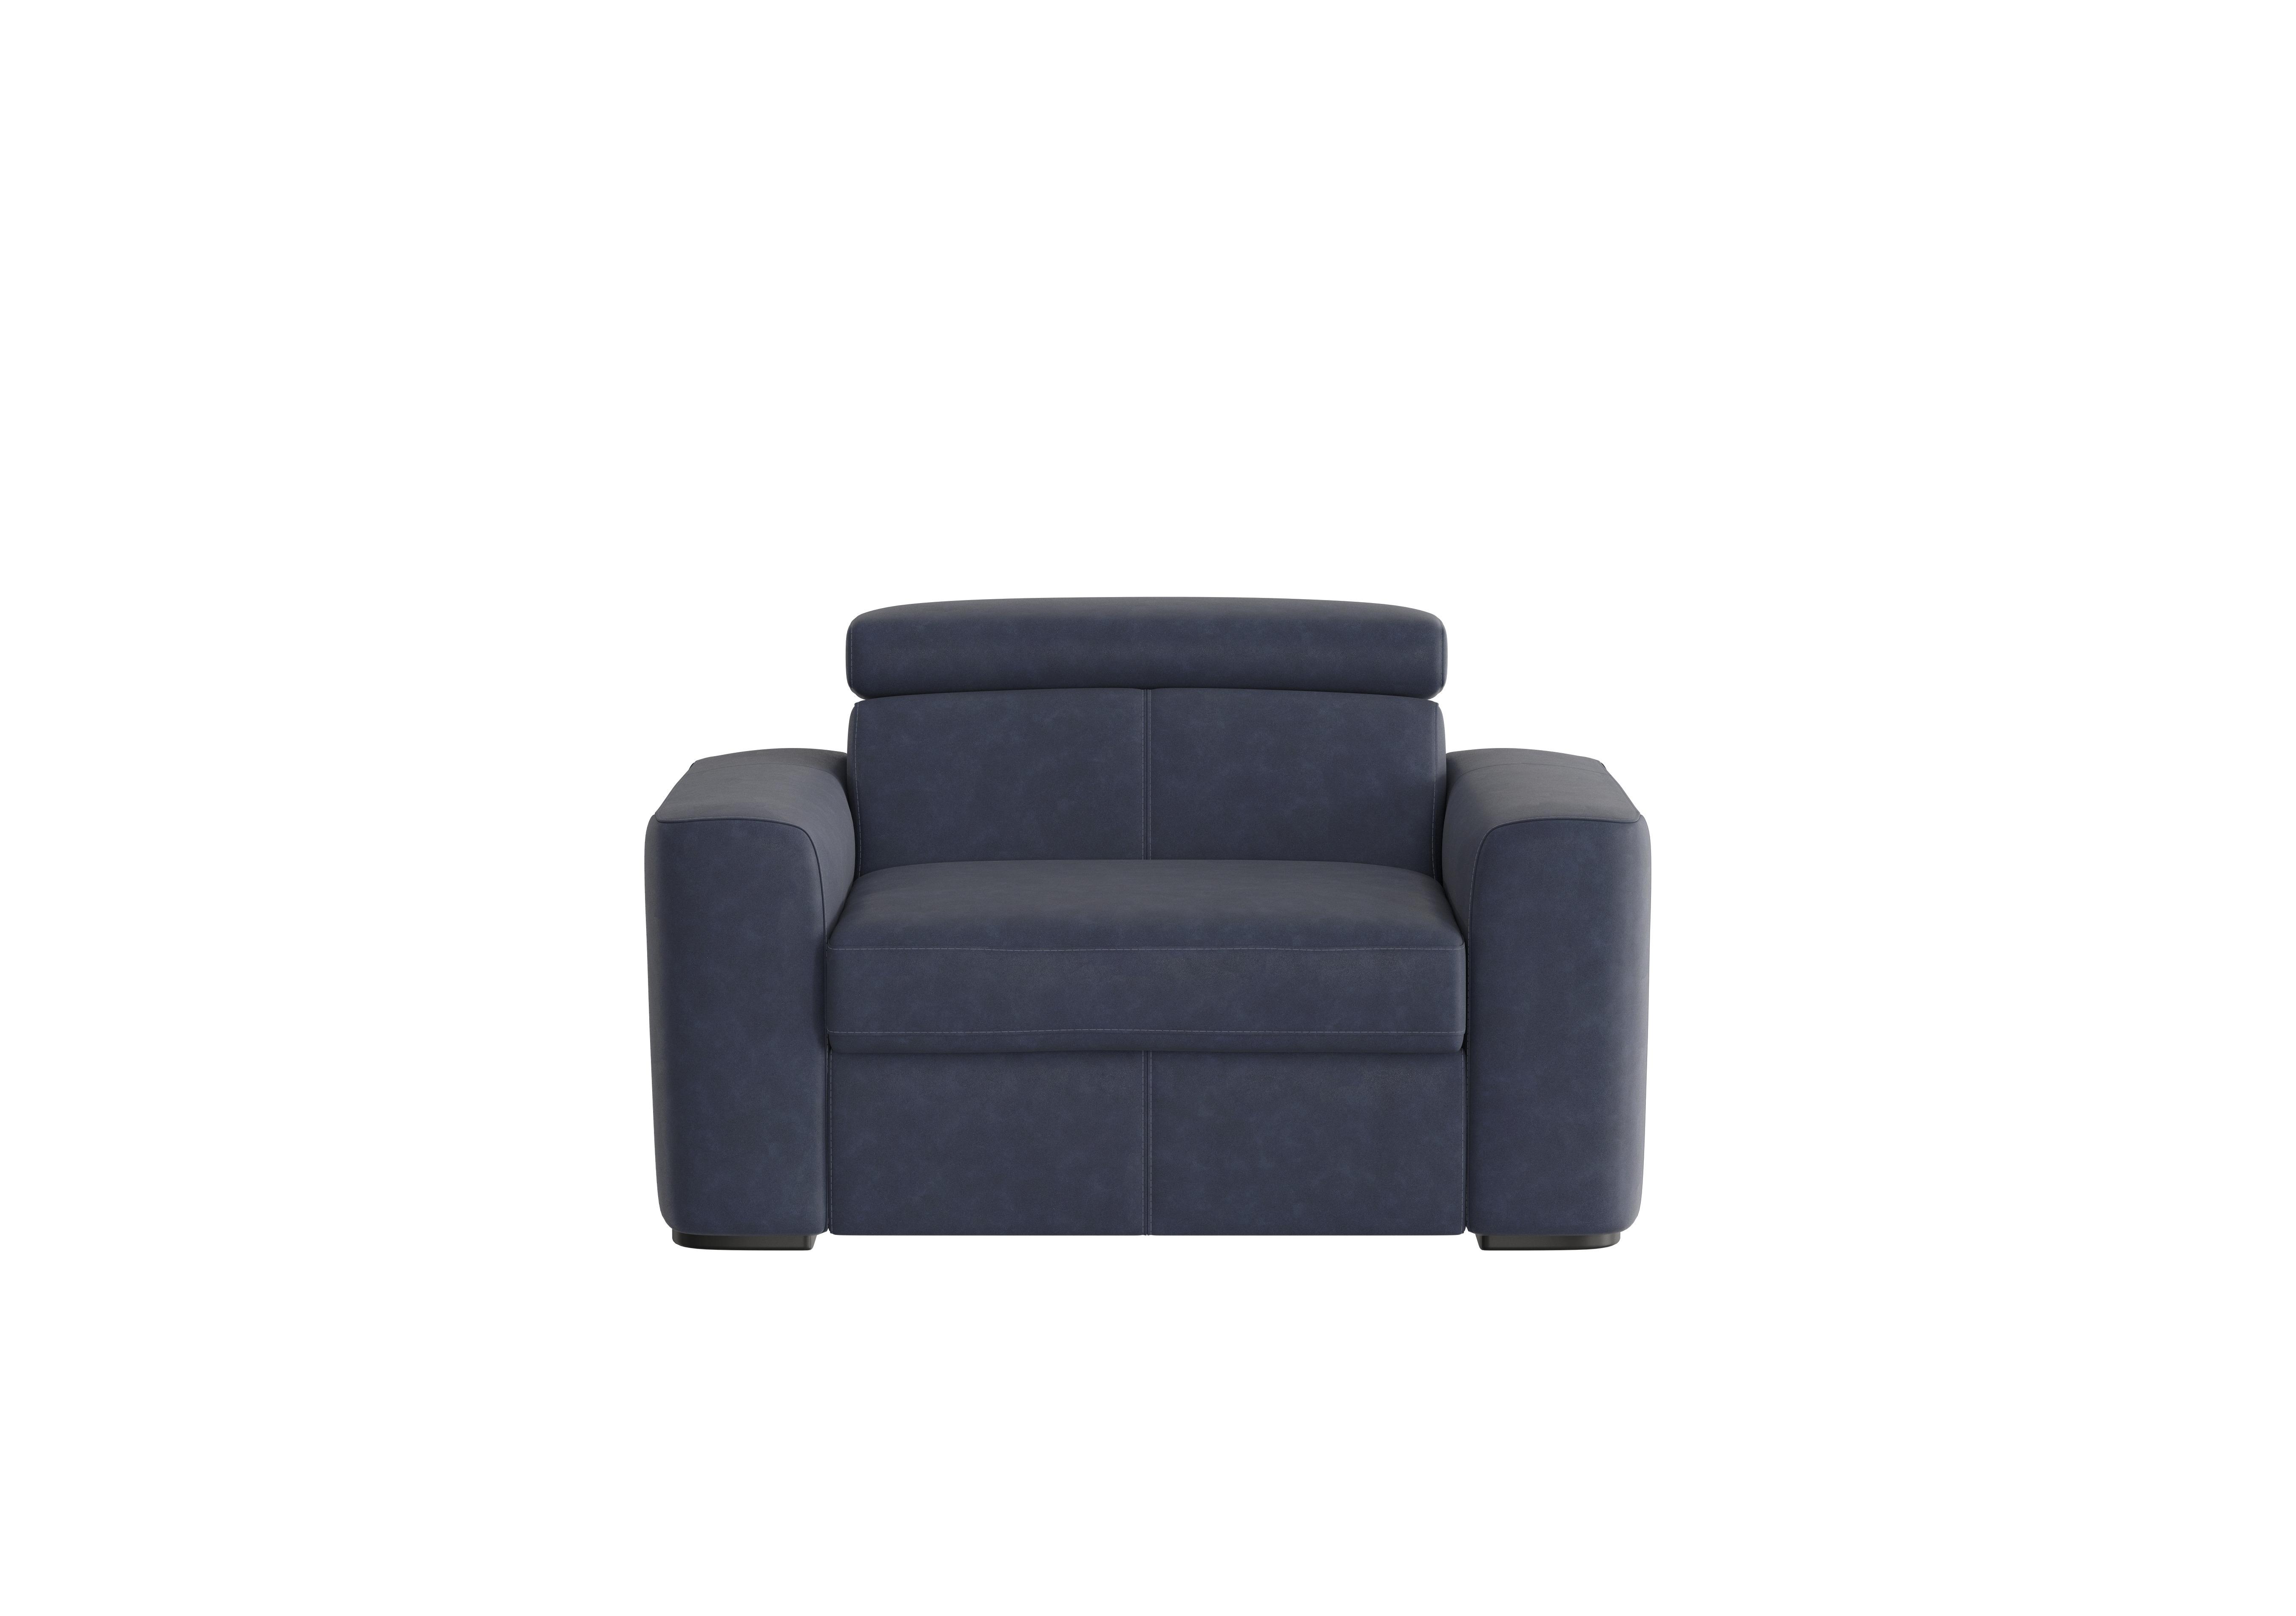 Infinity Fabric Chair Sofa Bed in Bfa-Ori-R23 Blue on Furniture Village